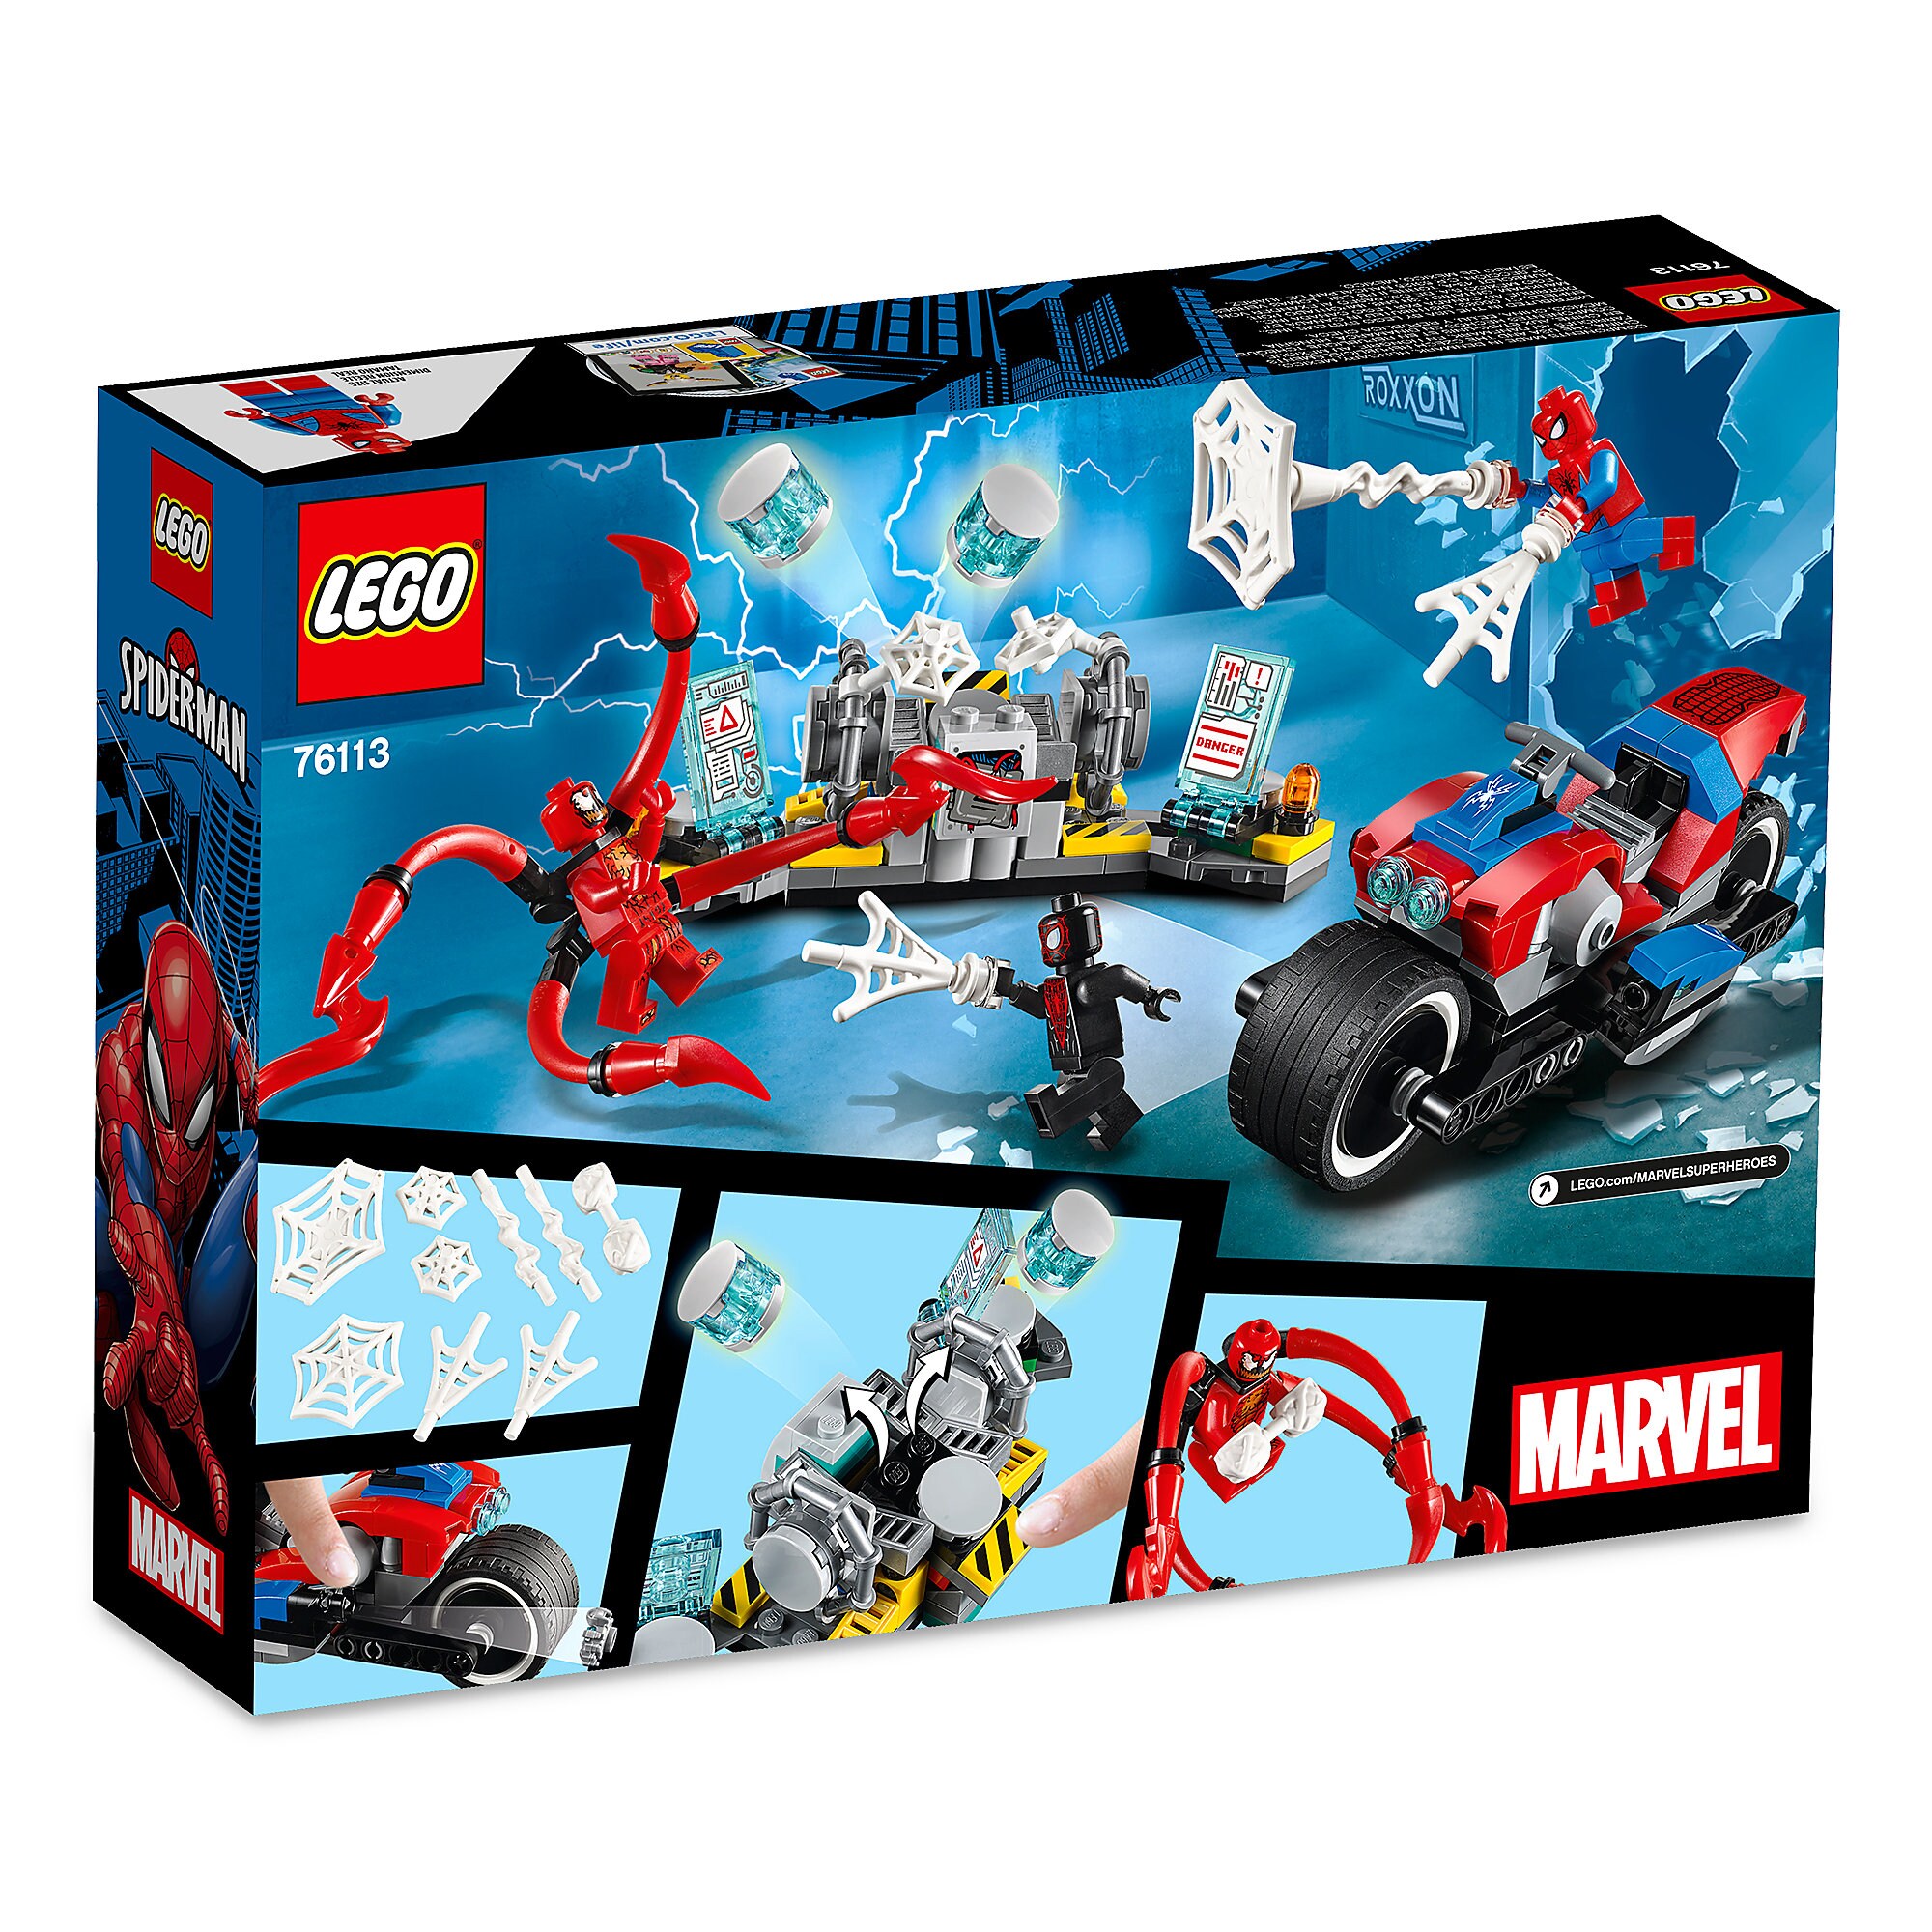 Spider-Man Bike Rescue Playset by LEGO